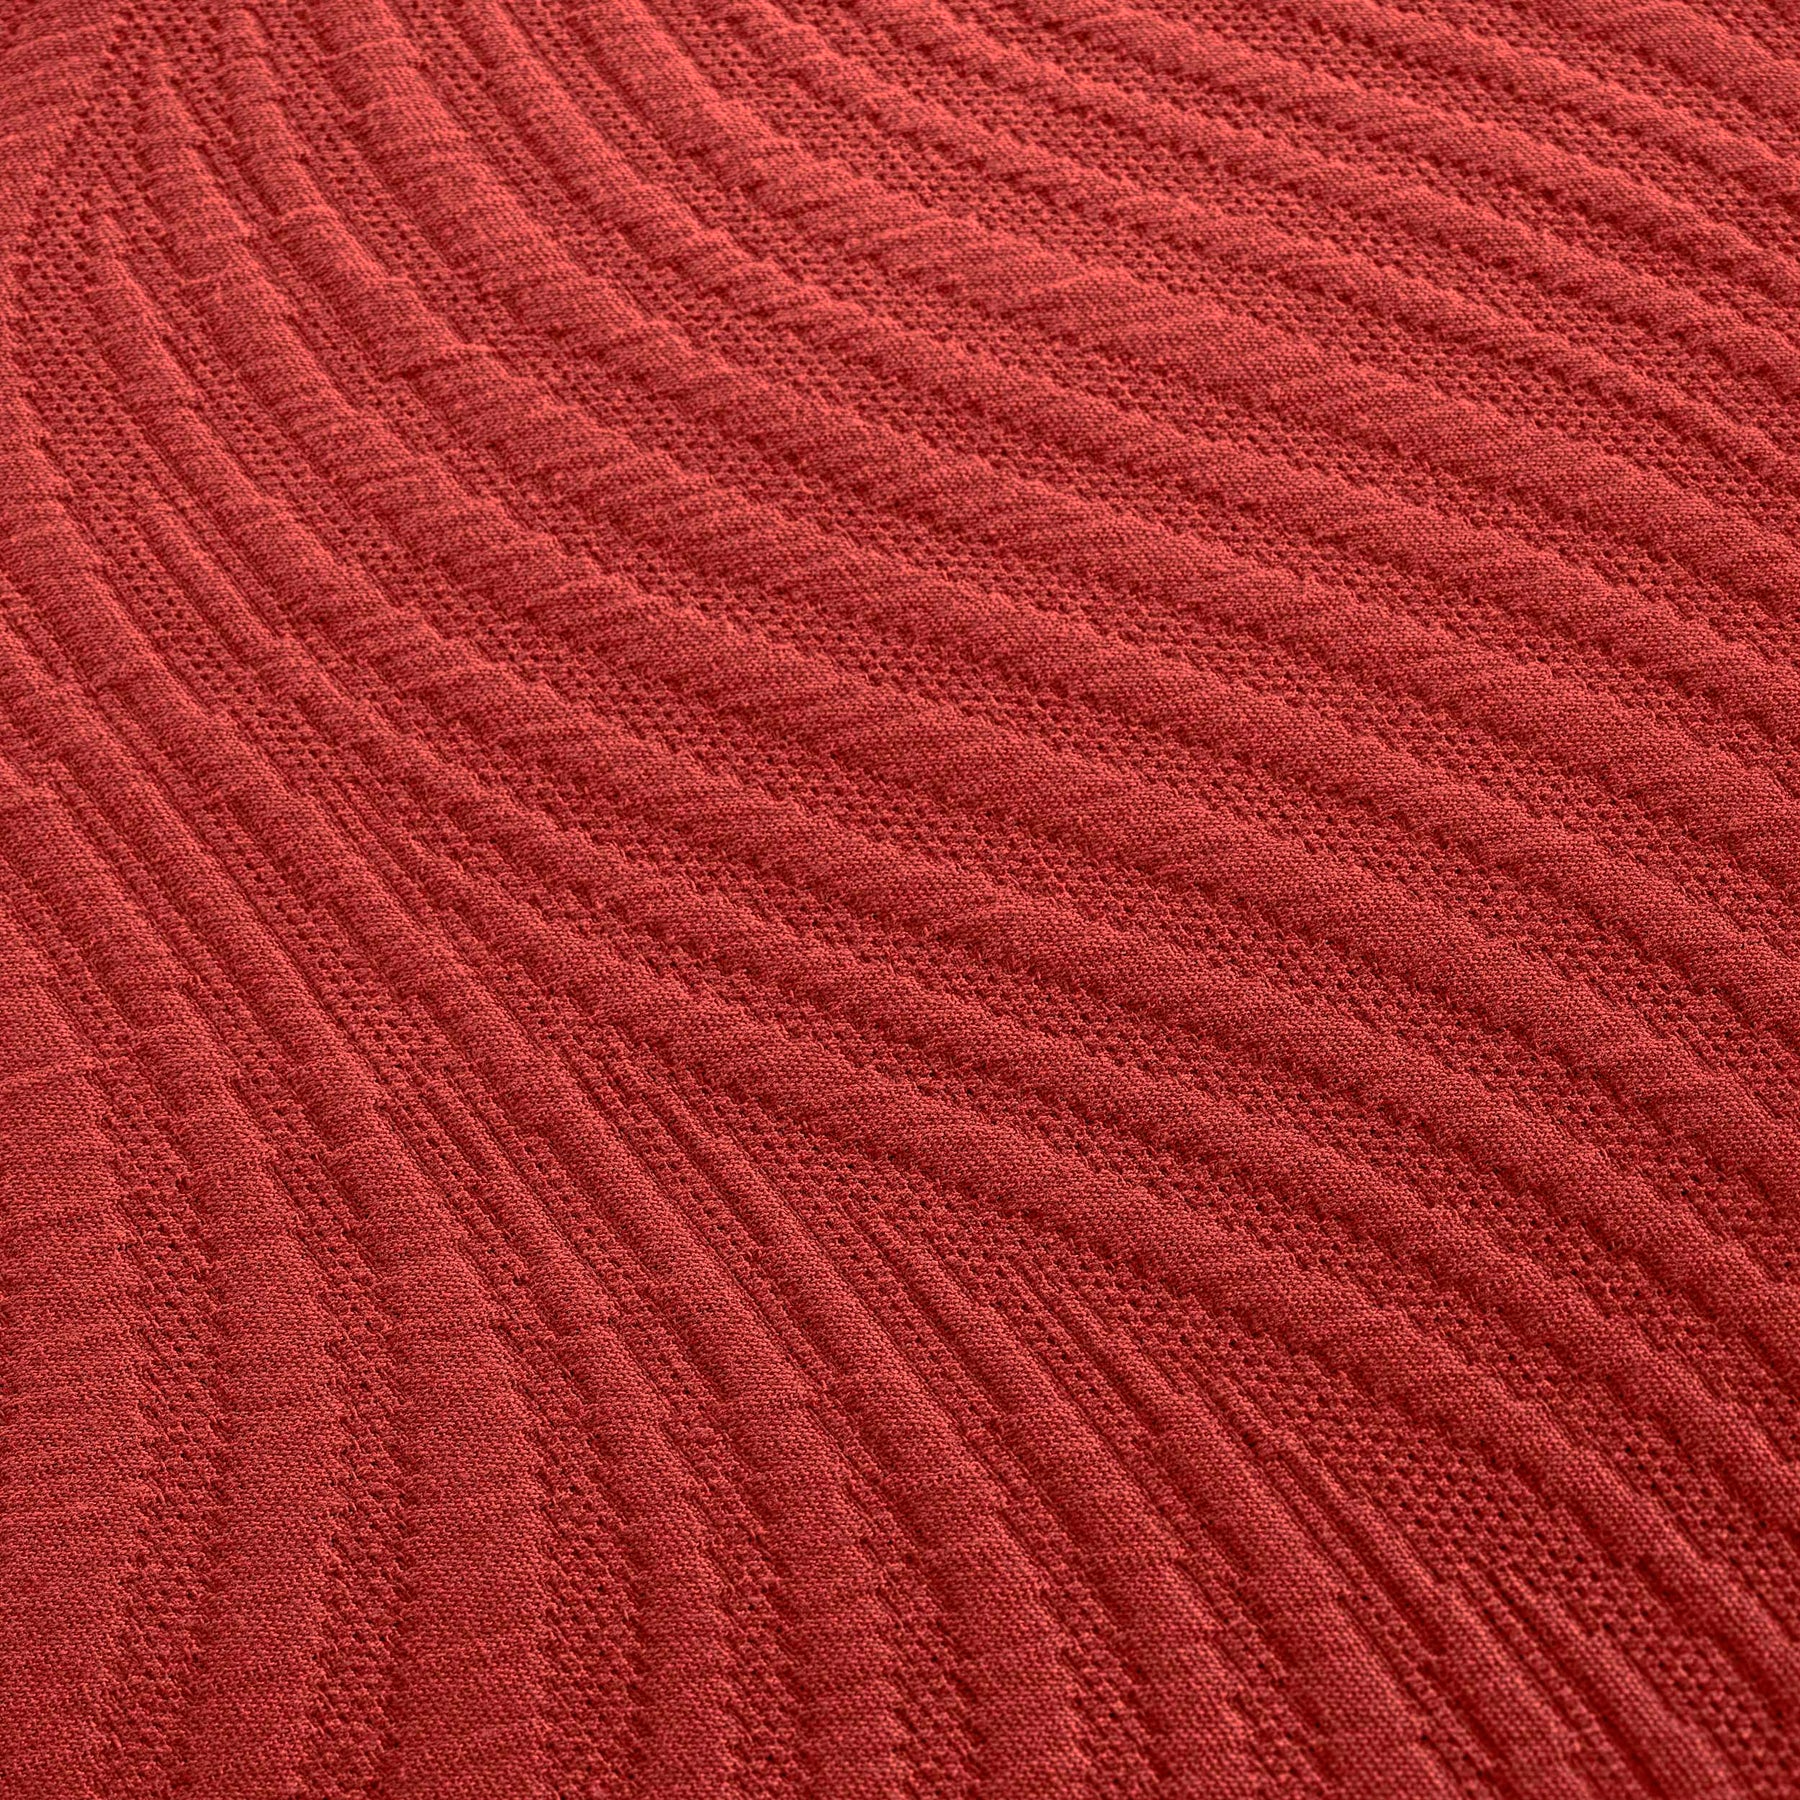 Cascade Cotton Jacquard Matelasse 3-Piece Bedspread Set - Cranberry